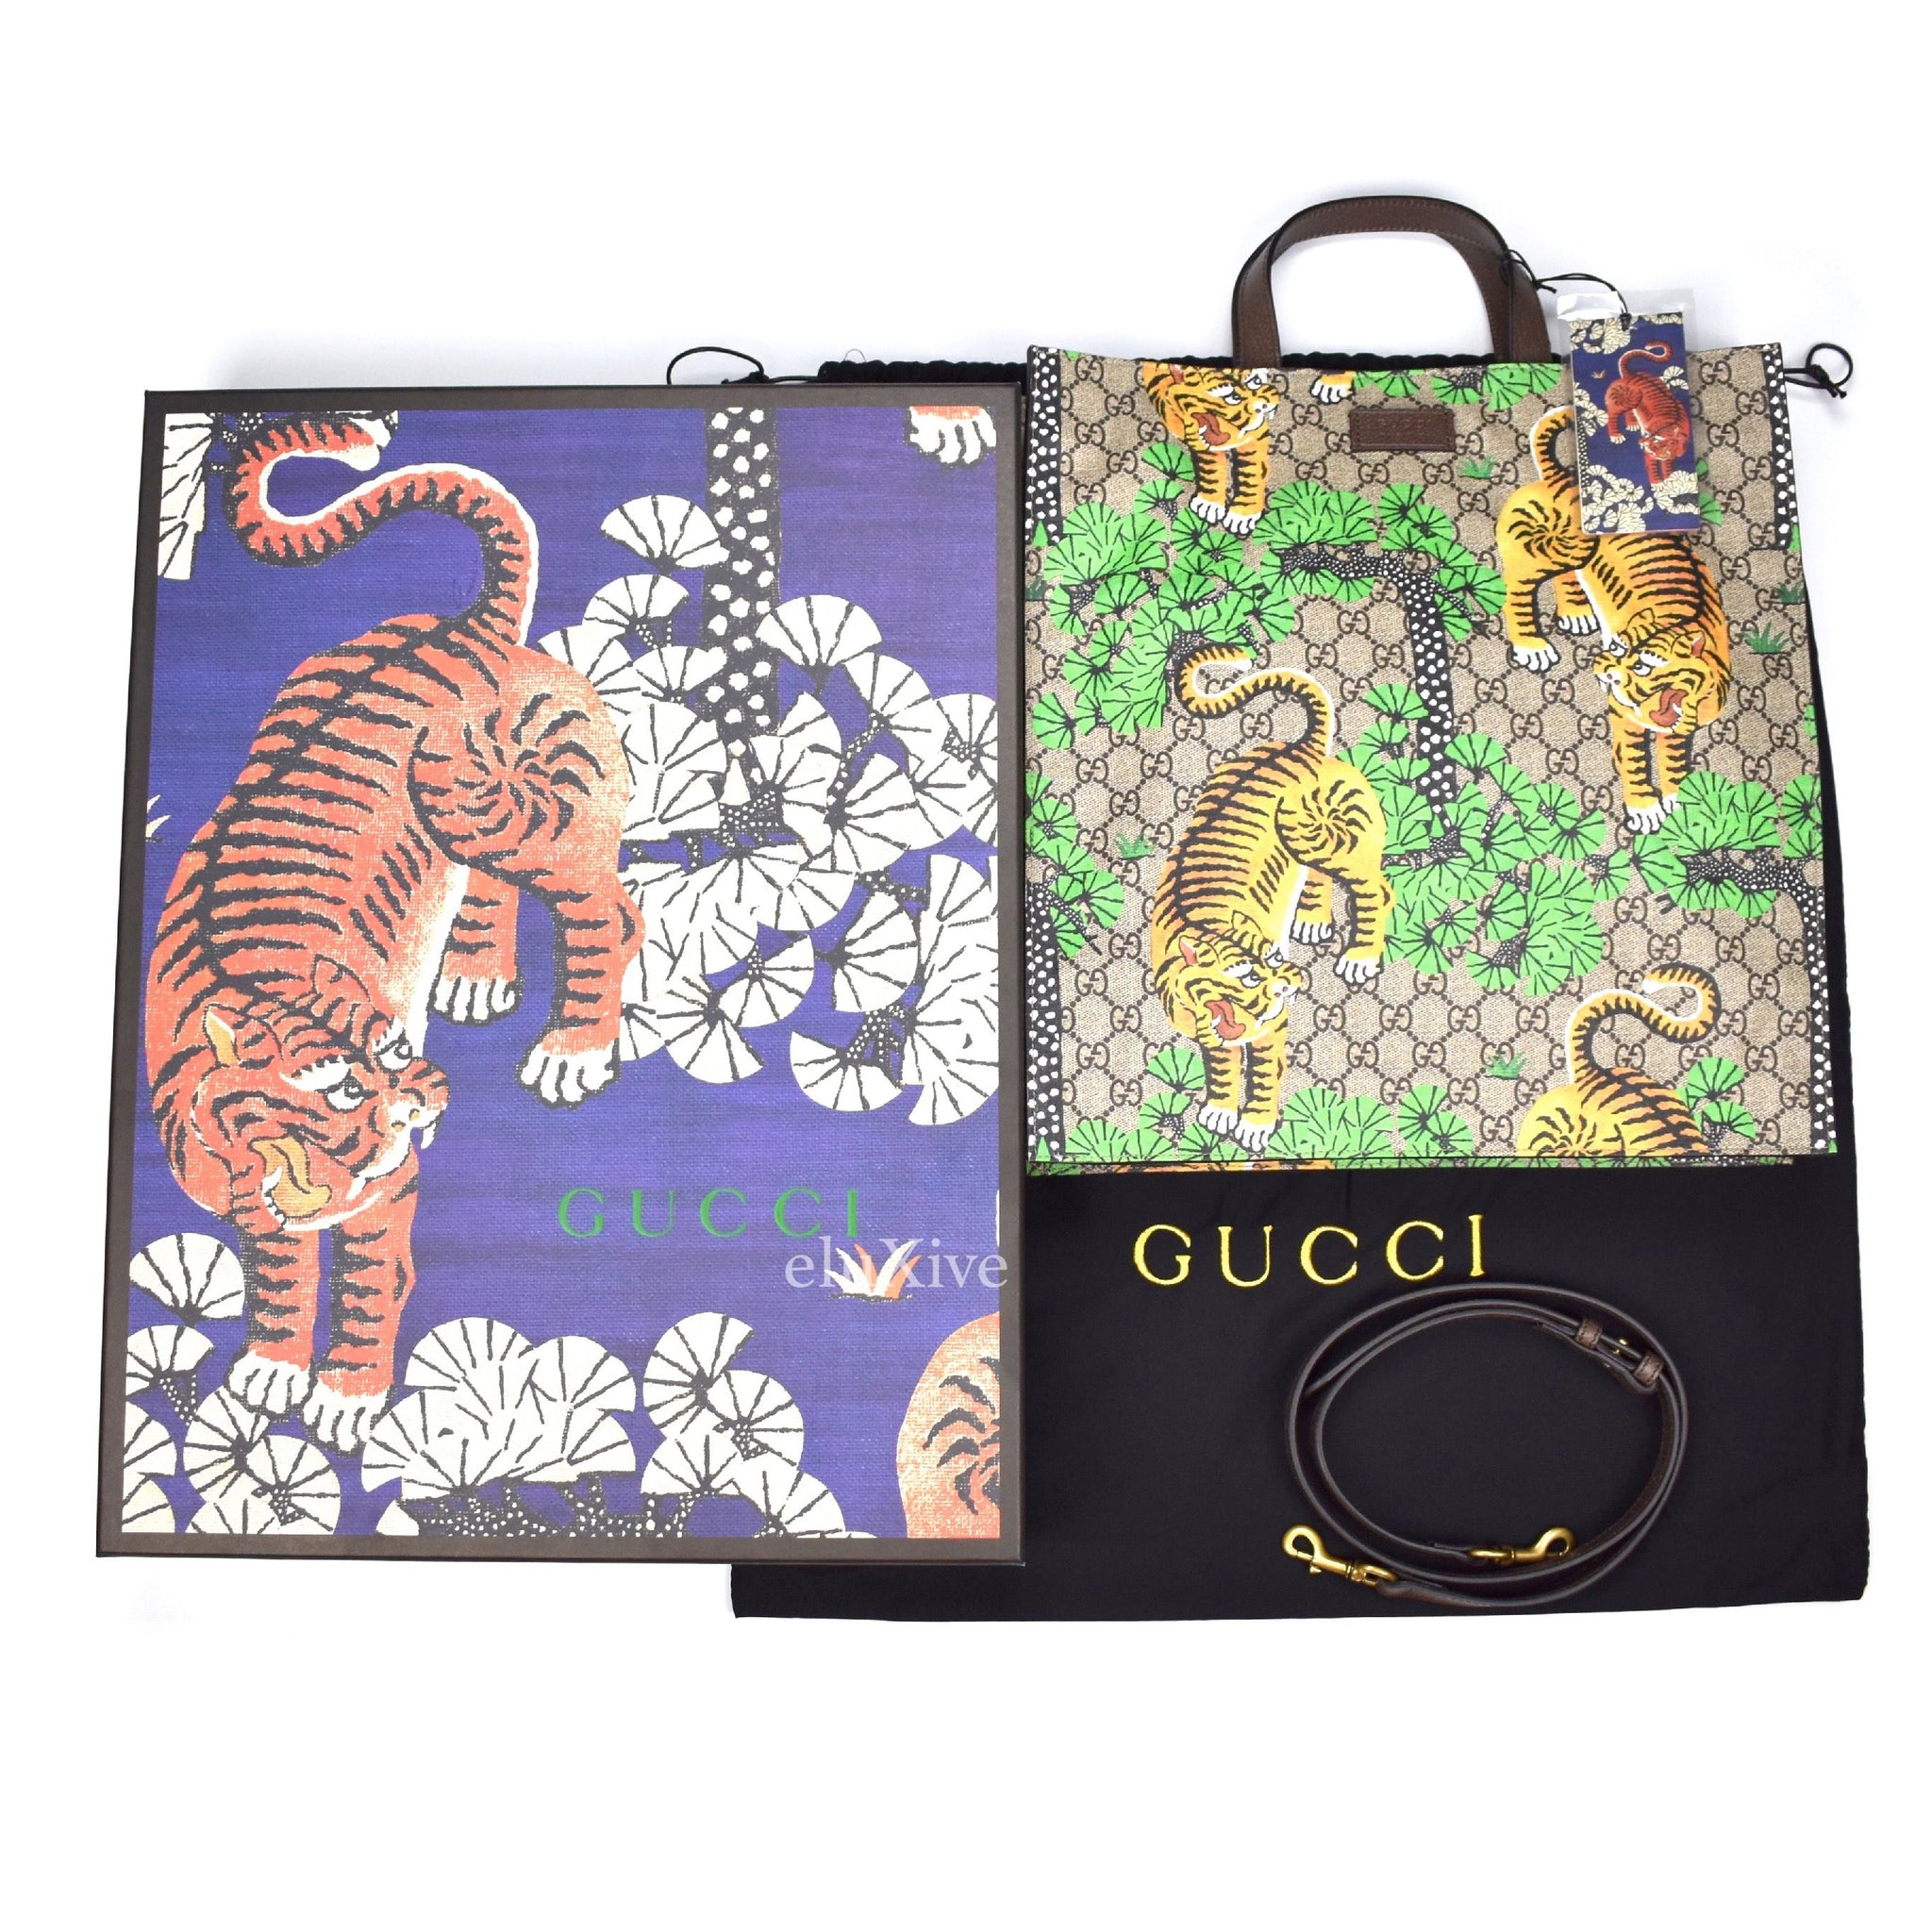 Gucci - GG Supreme Logo Tiger Print Canvas / Leather Tote Bag – eluXive